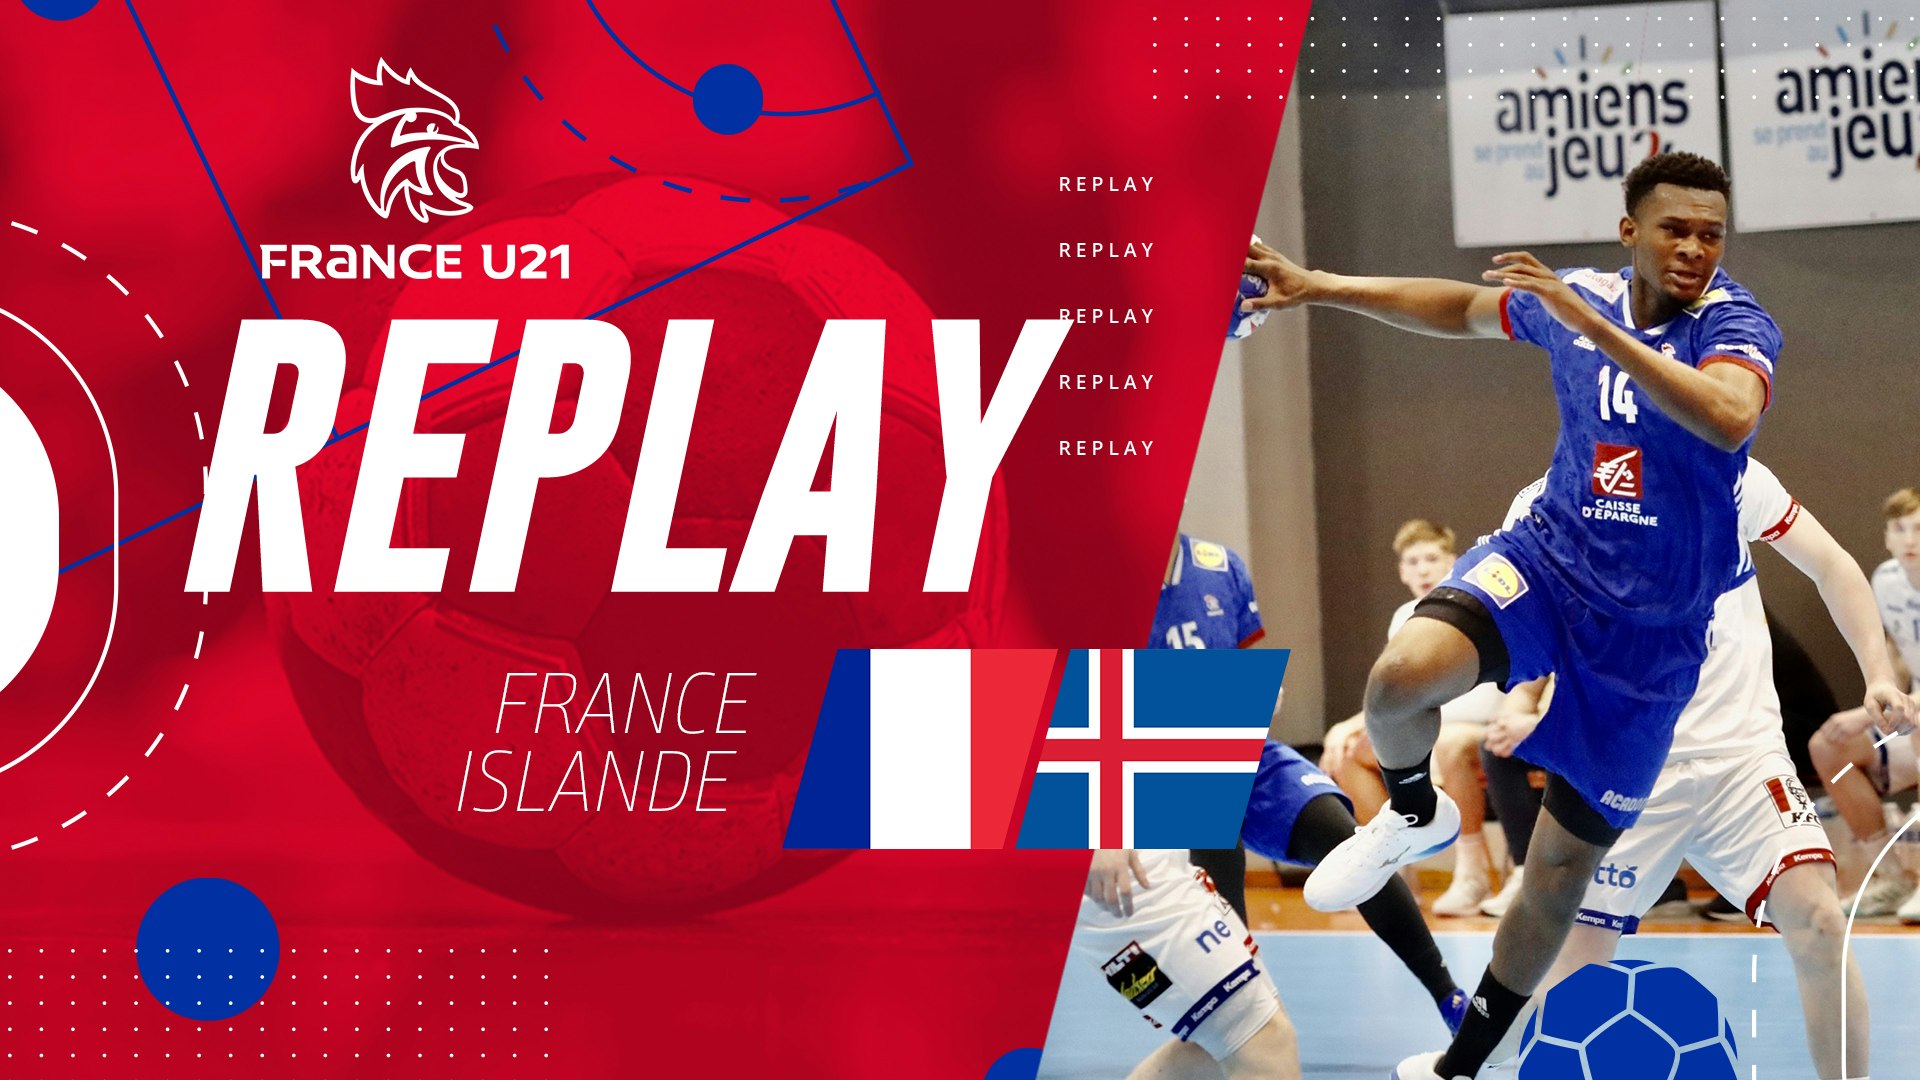 France/Islande U21, le replay 